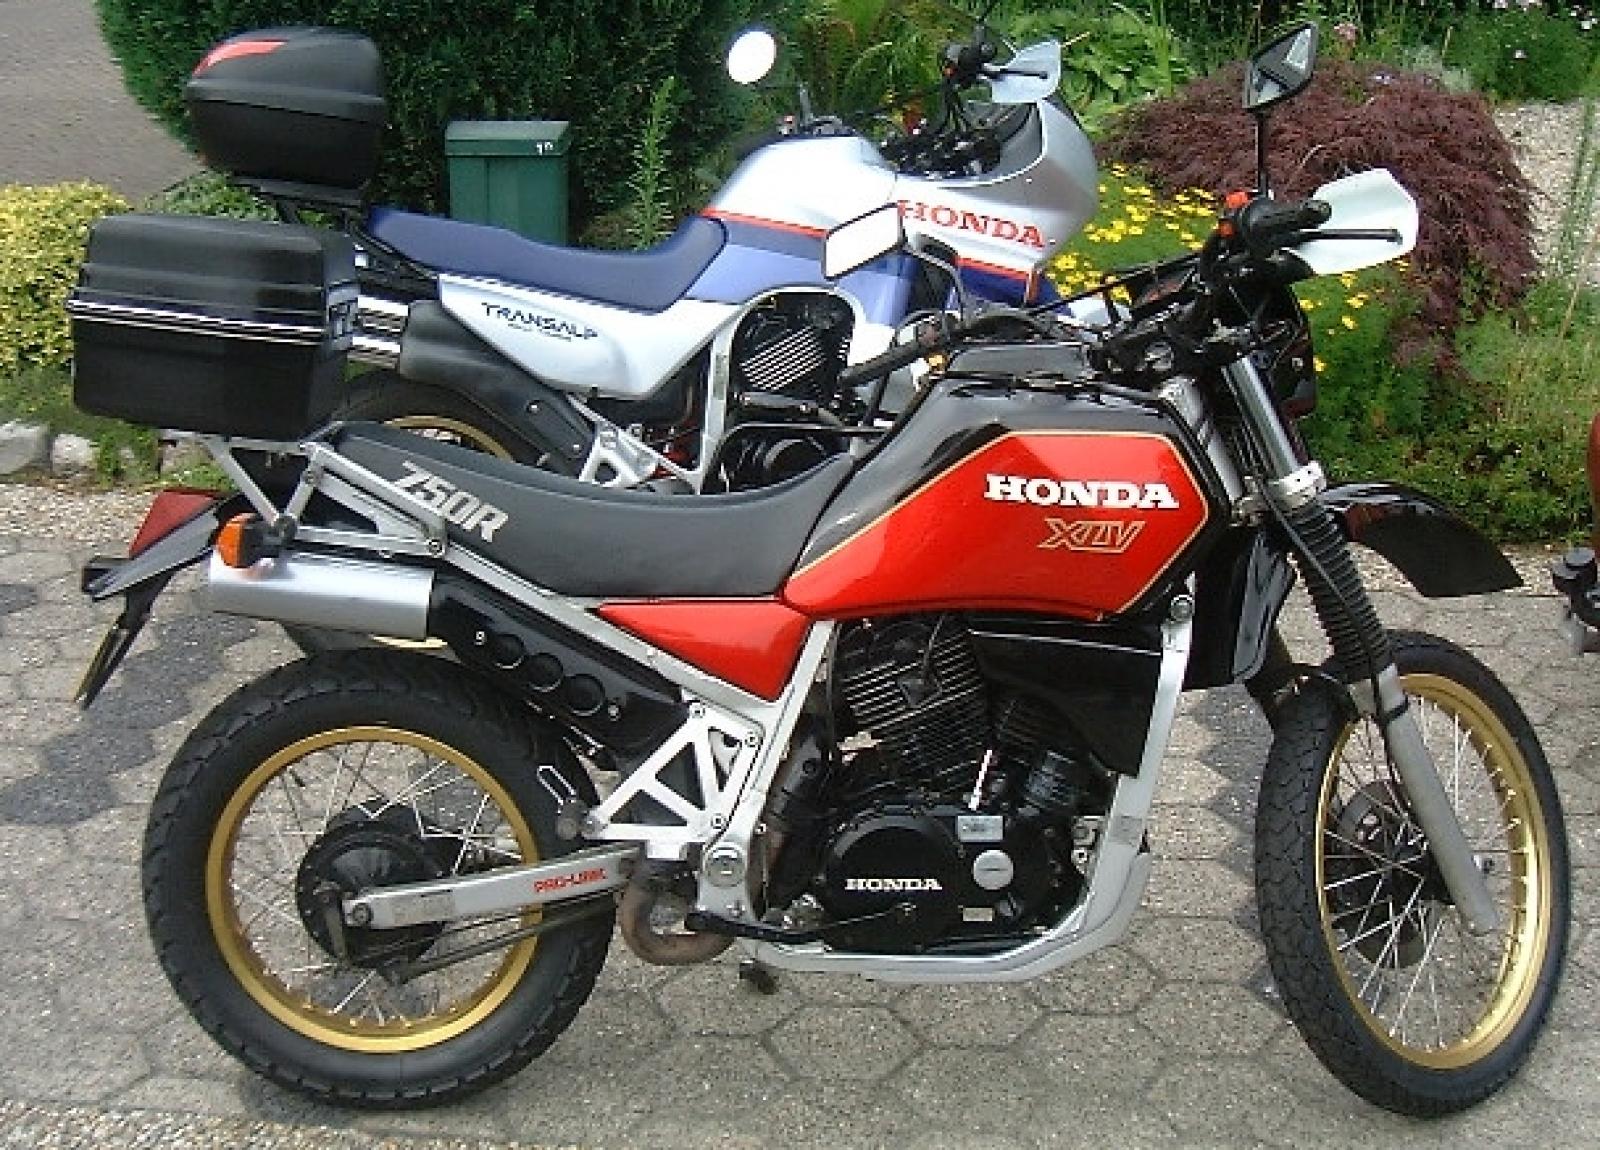 Honda XLV 750 R (reduced effect) 1984 photo - 3